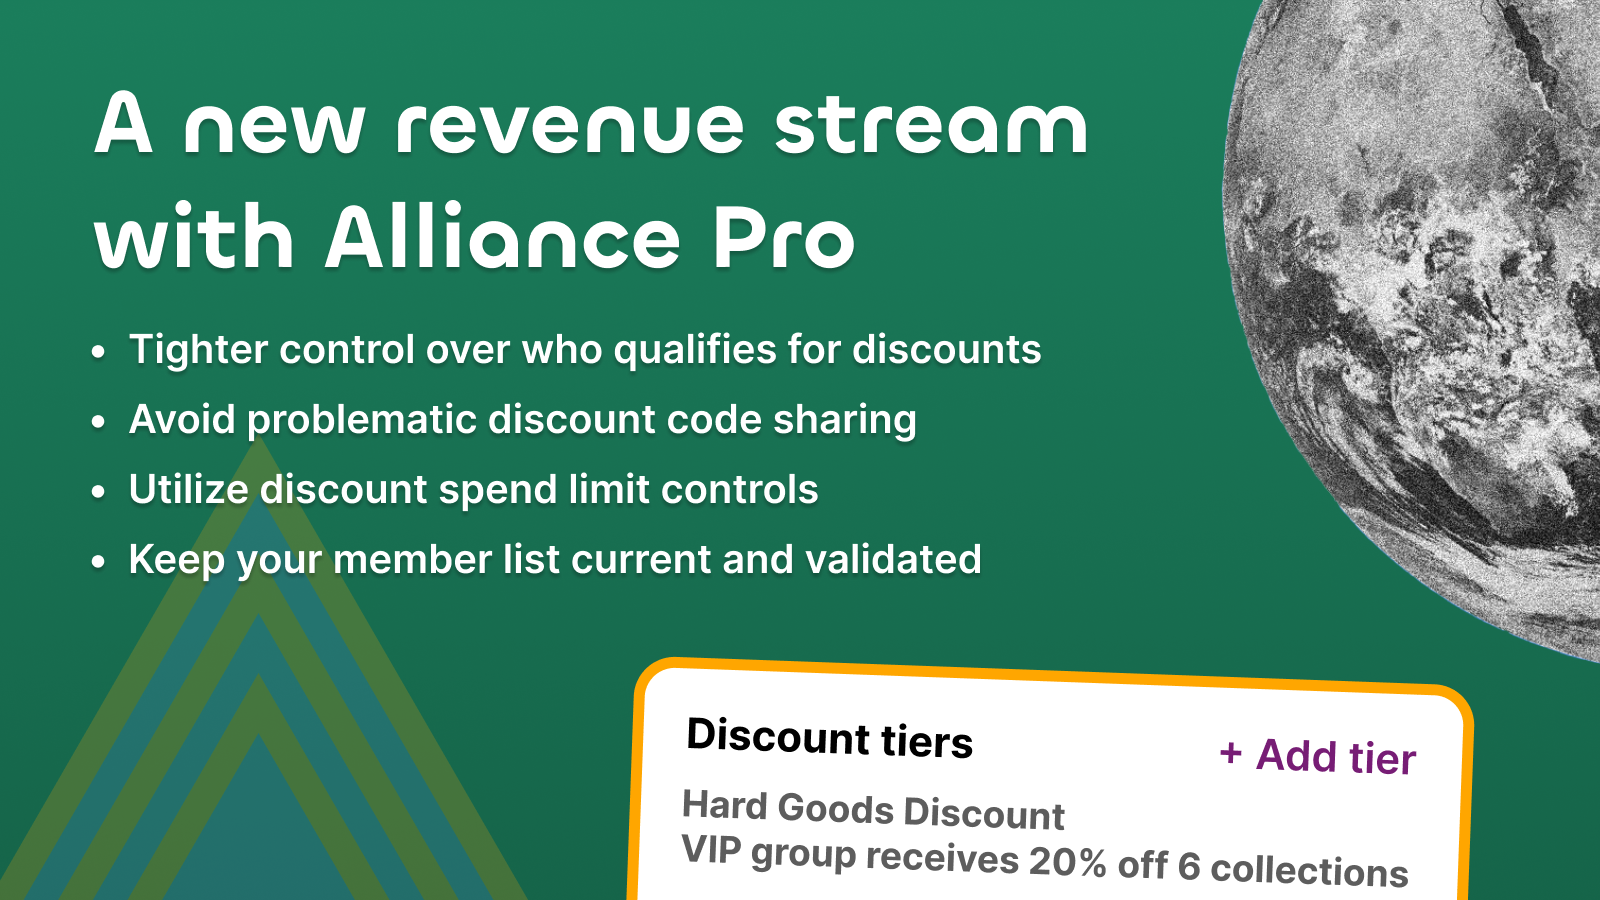 Anew revenue stream with Alliance Pro